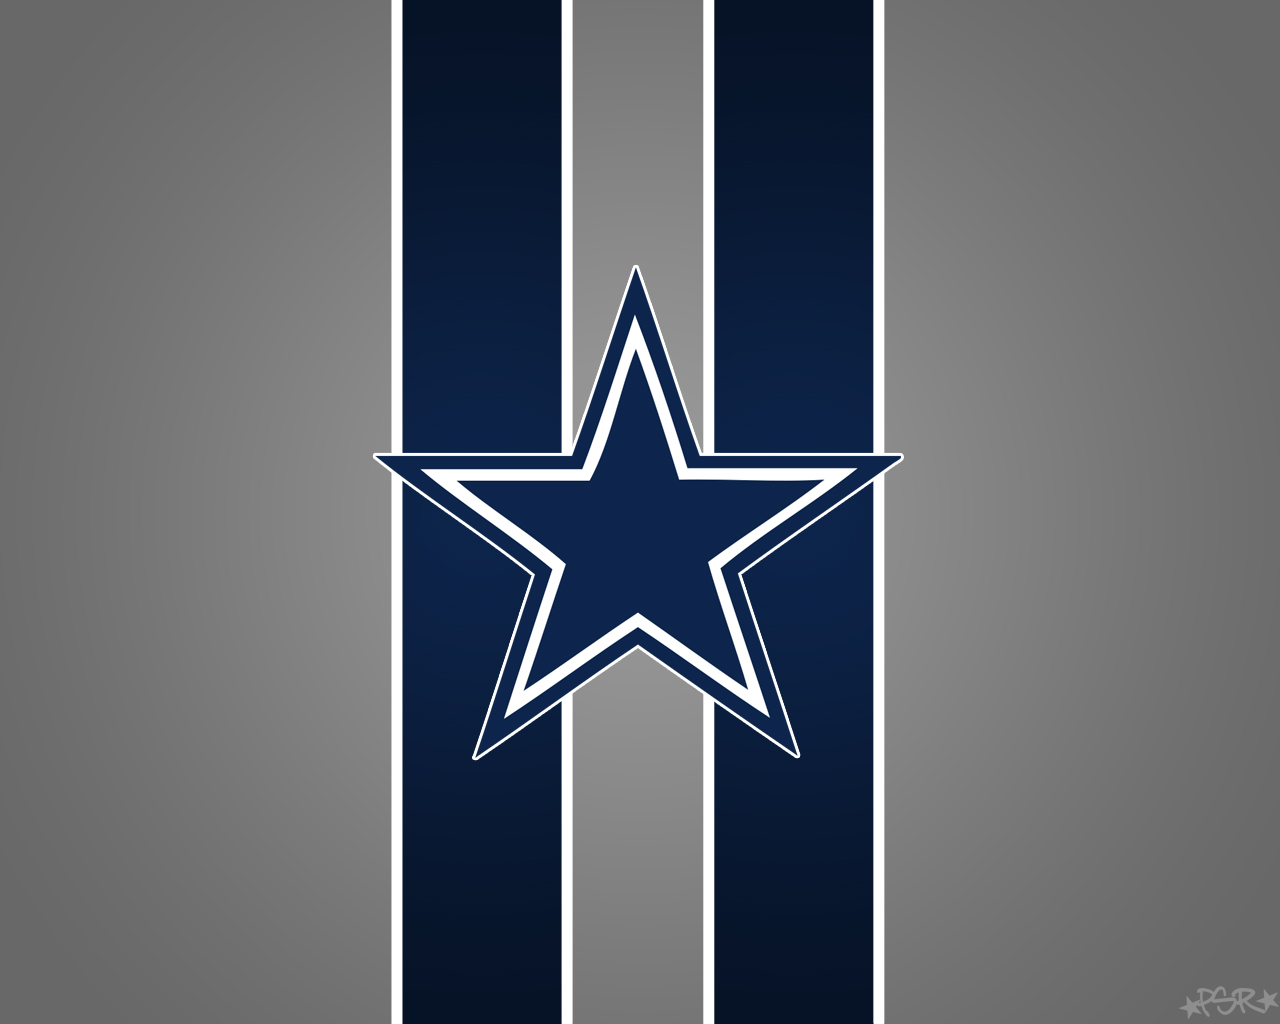 Enjoy this new Dallas Cowboys desktop background